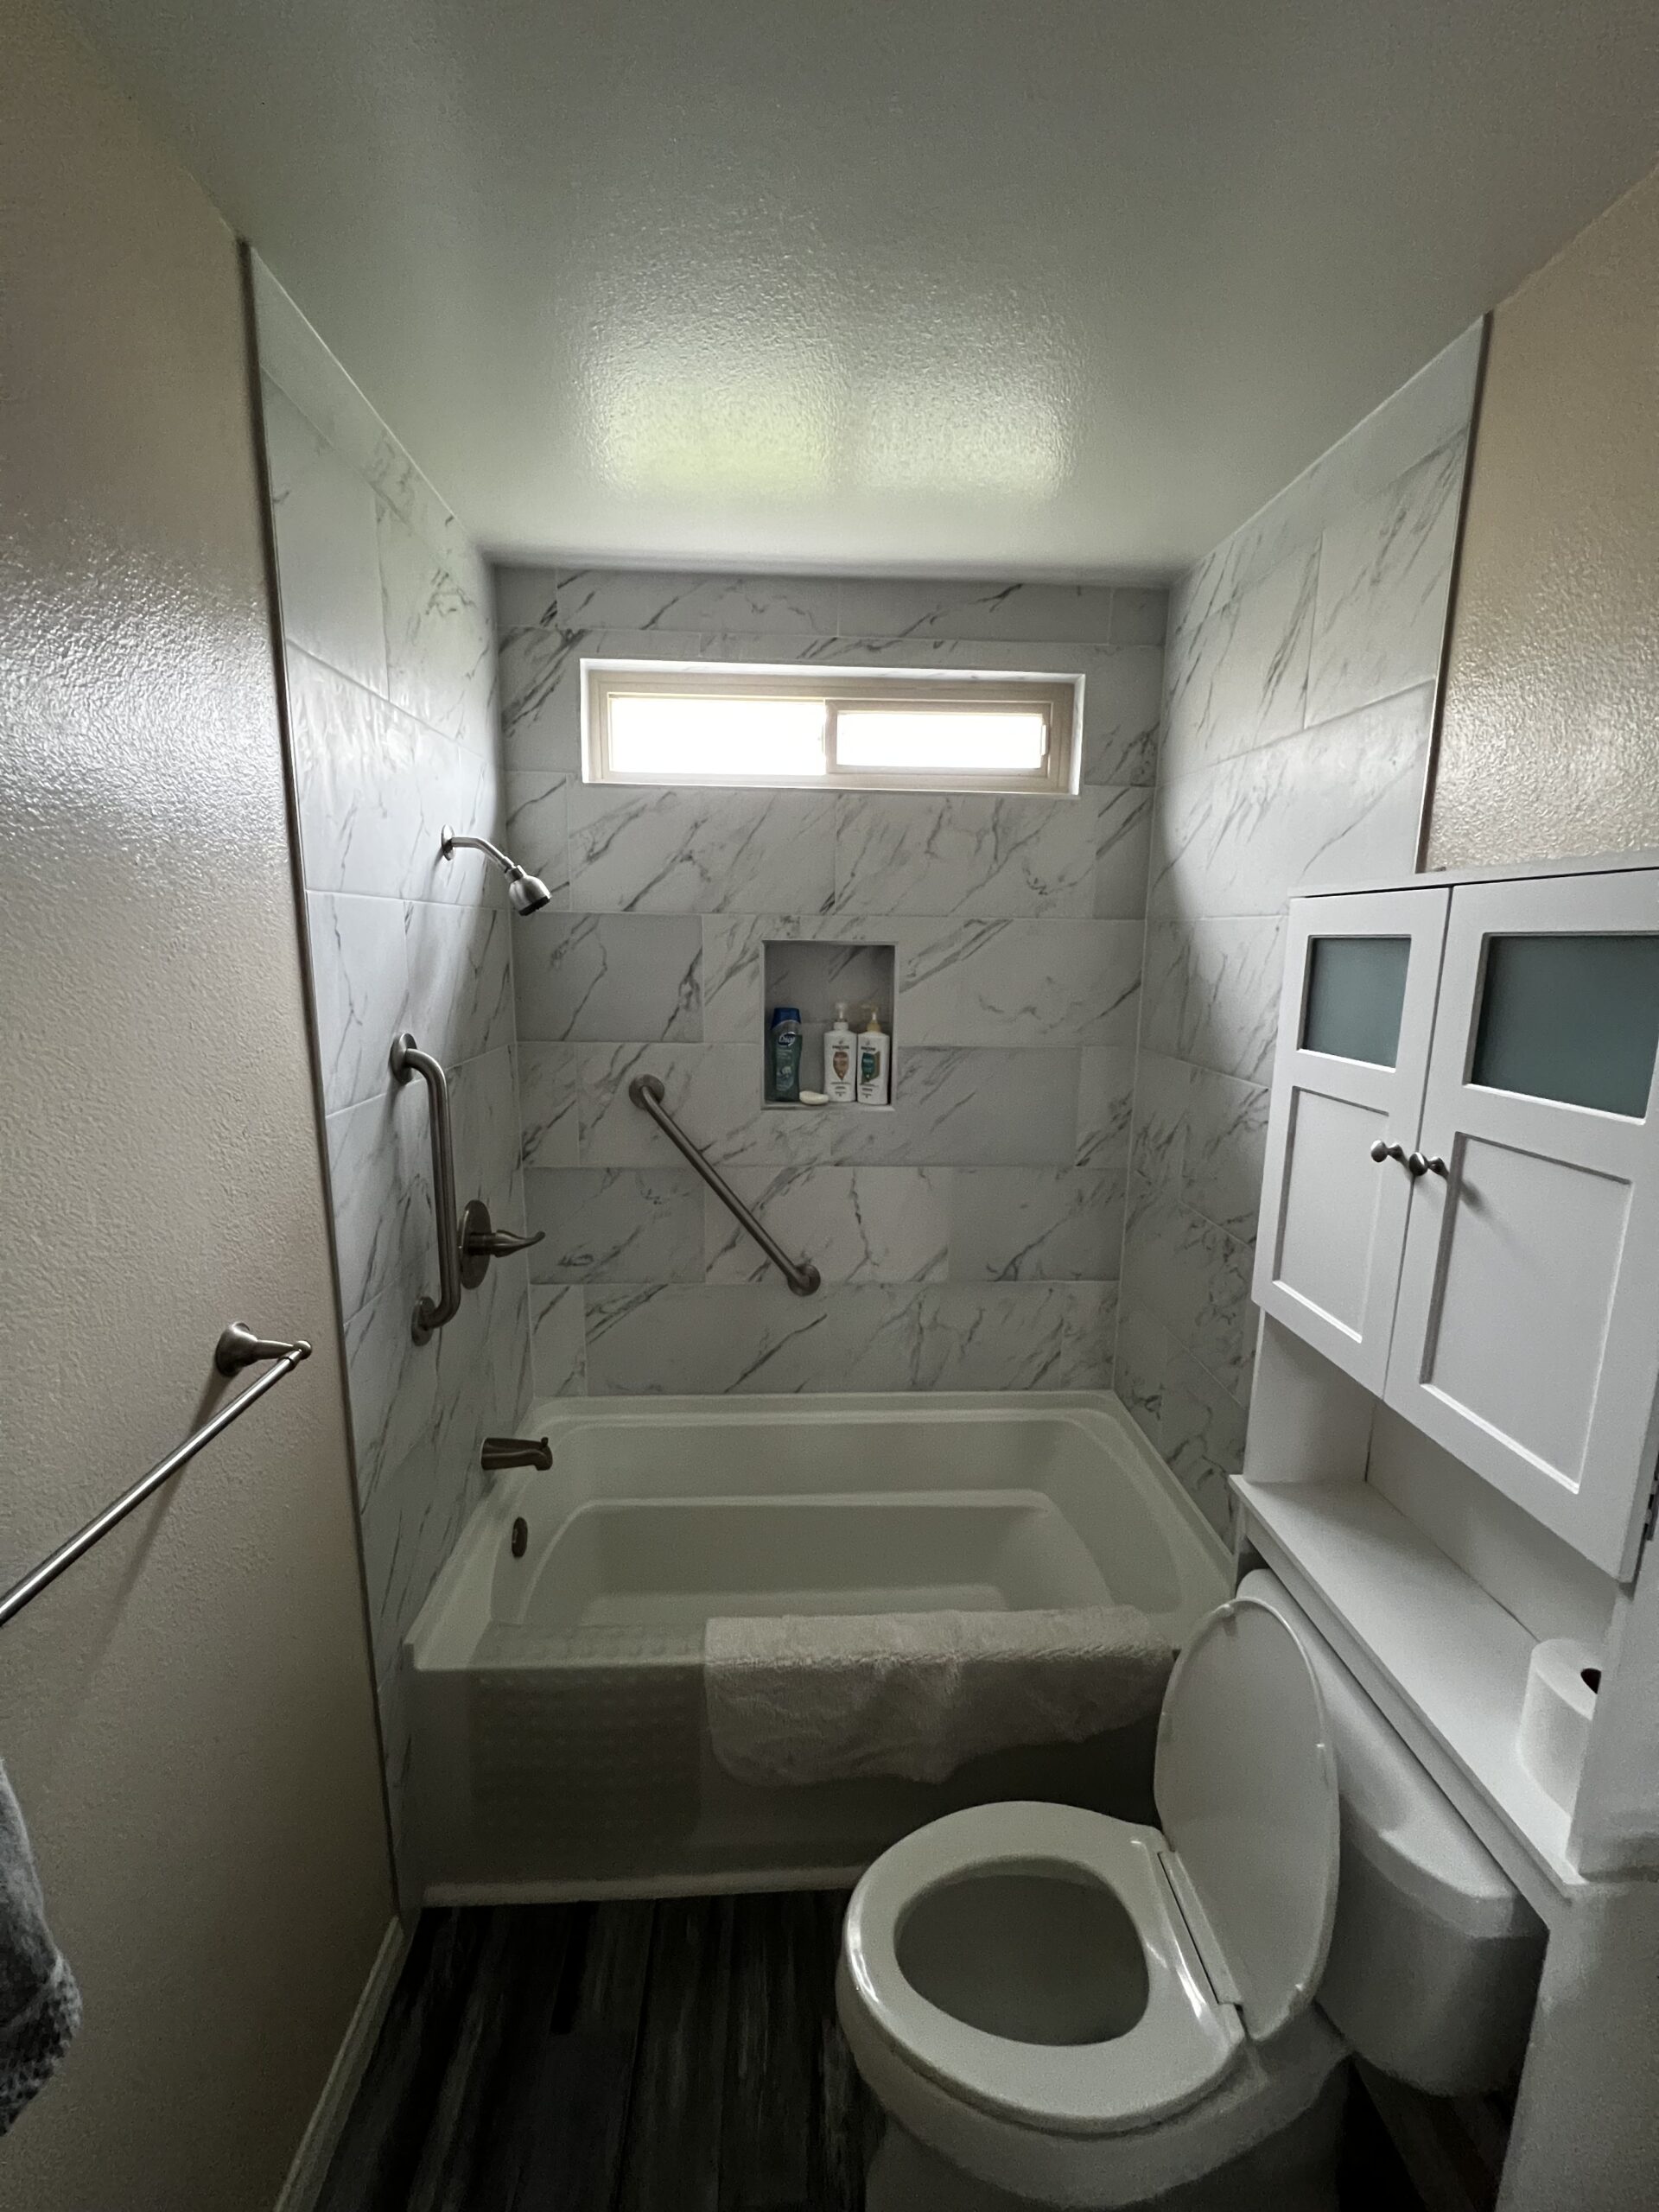 Bath-to-Shower Conversion in Los Angeles, CA